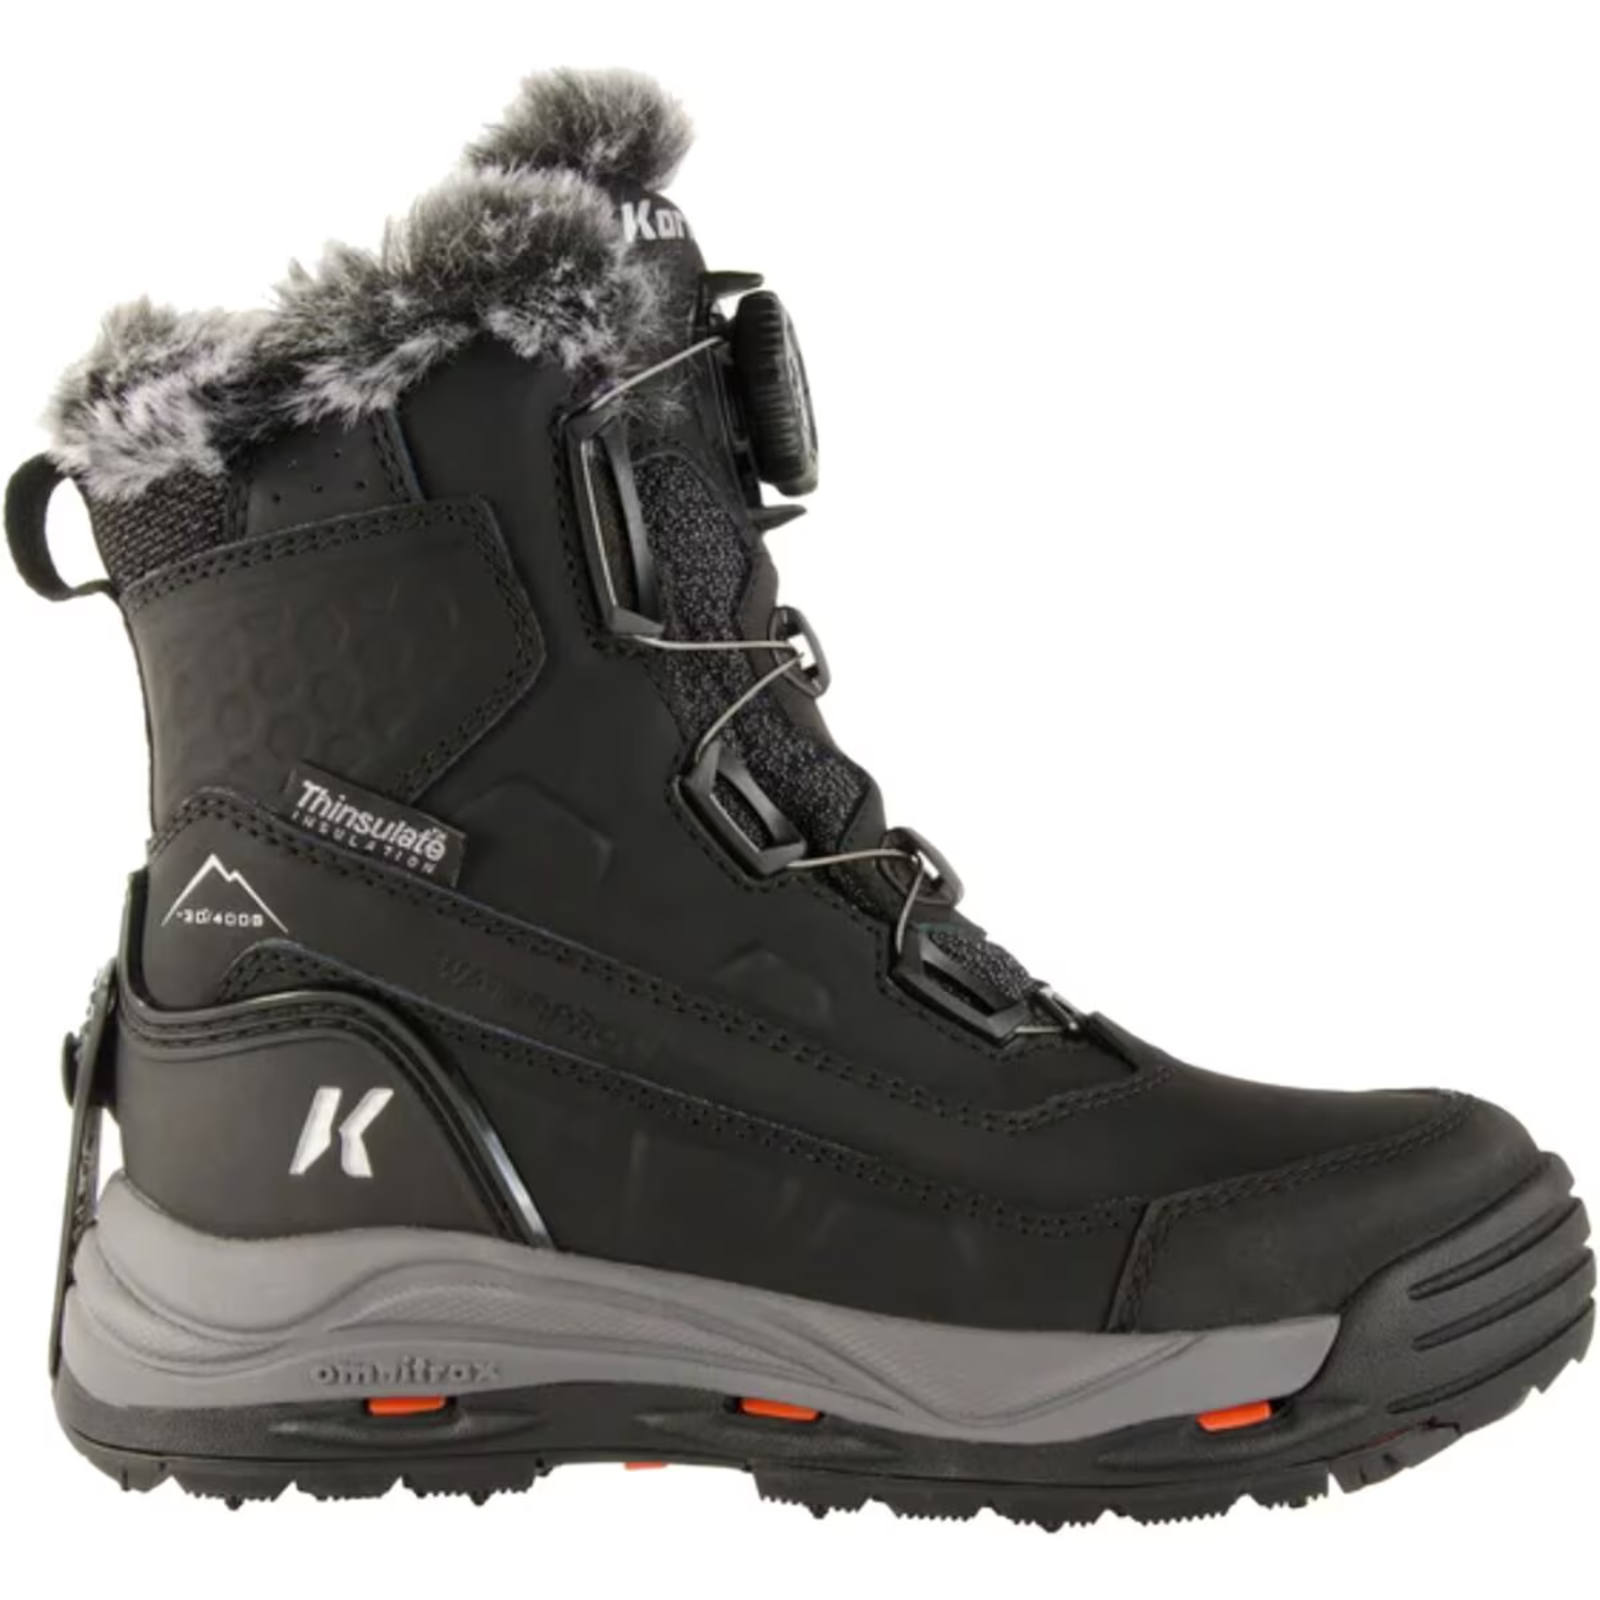 Korkers Snowmageddon Women's Winter Boots